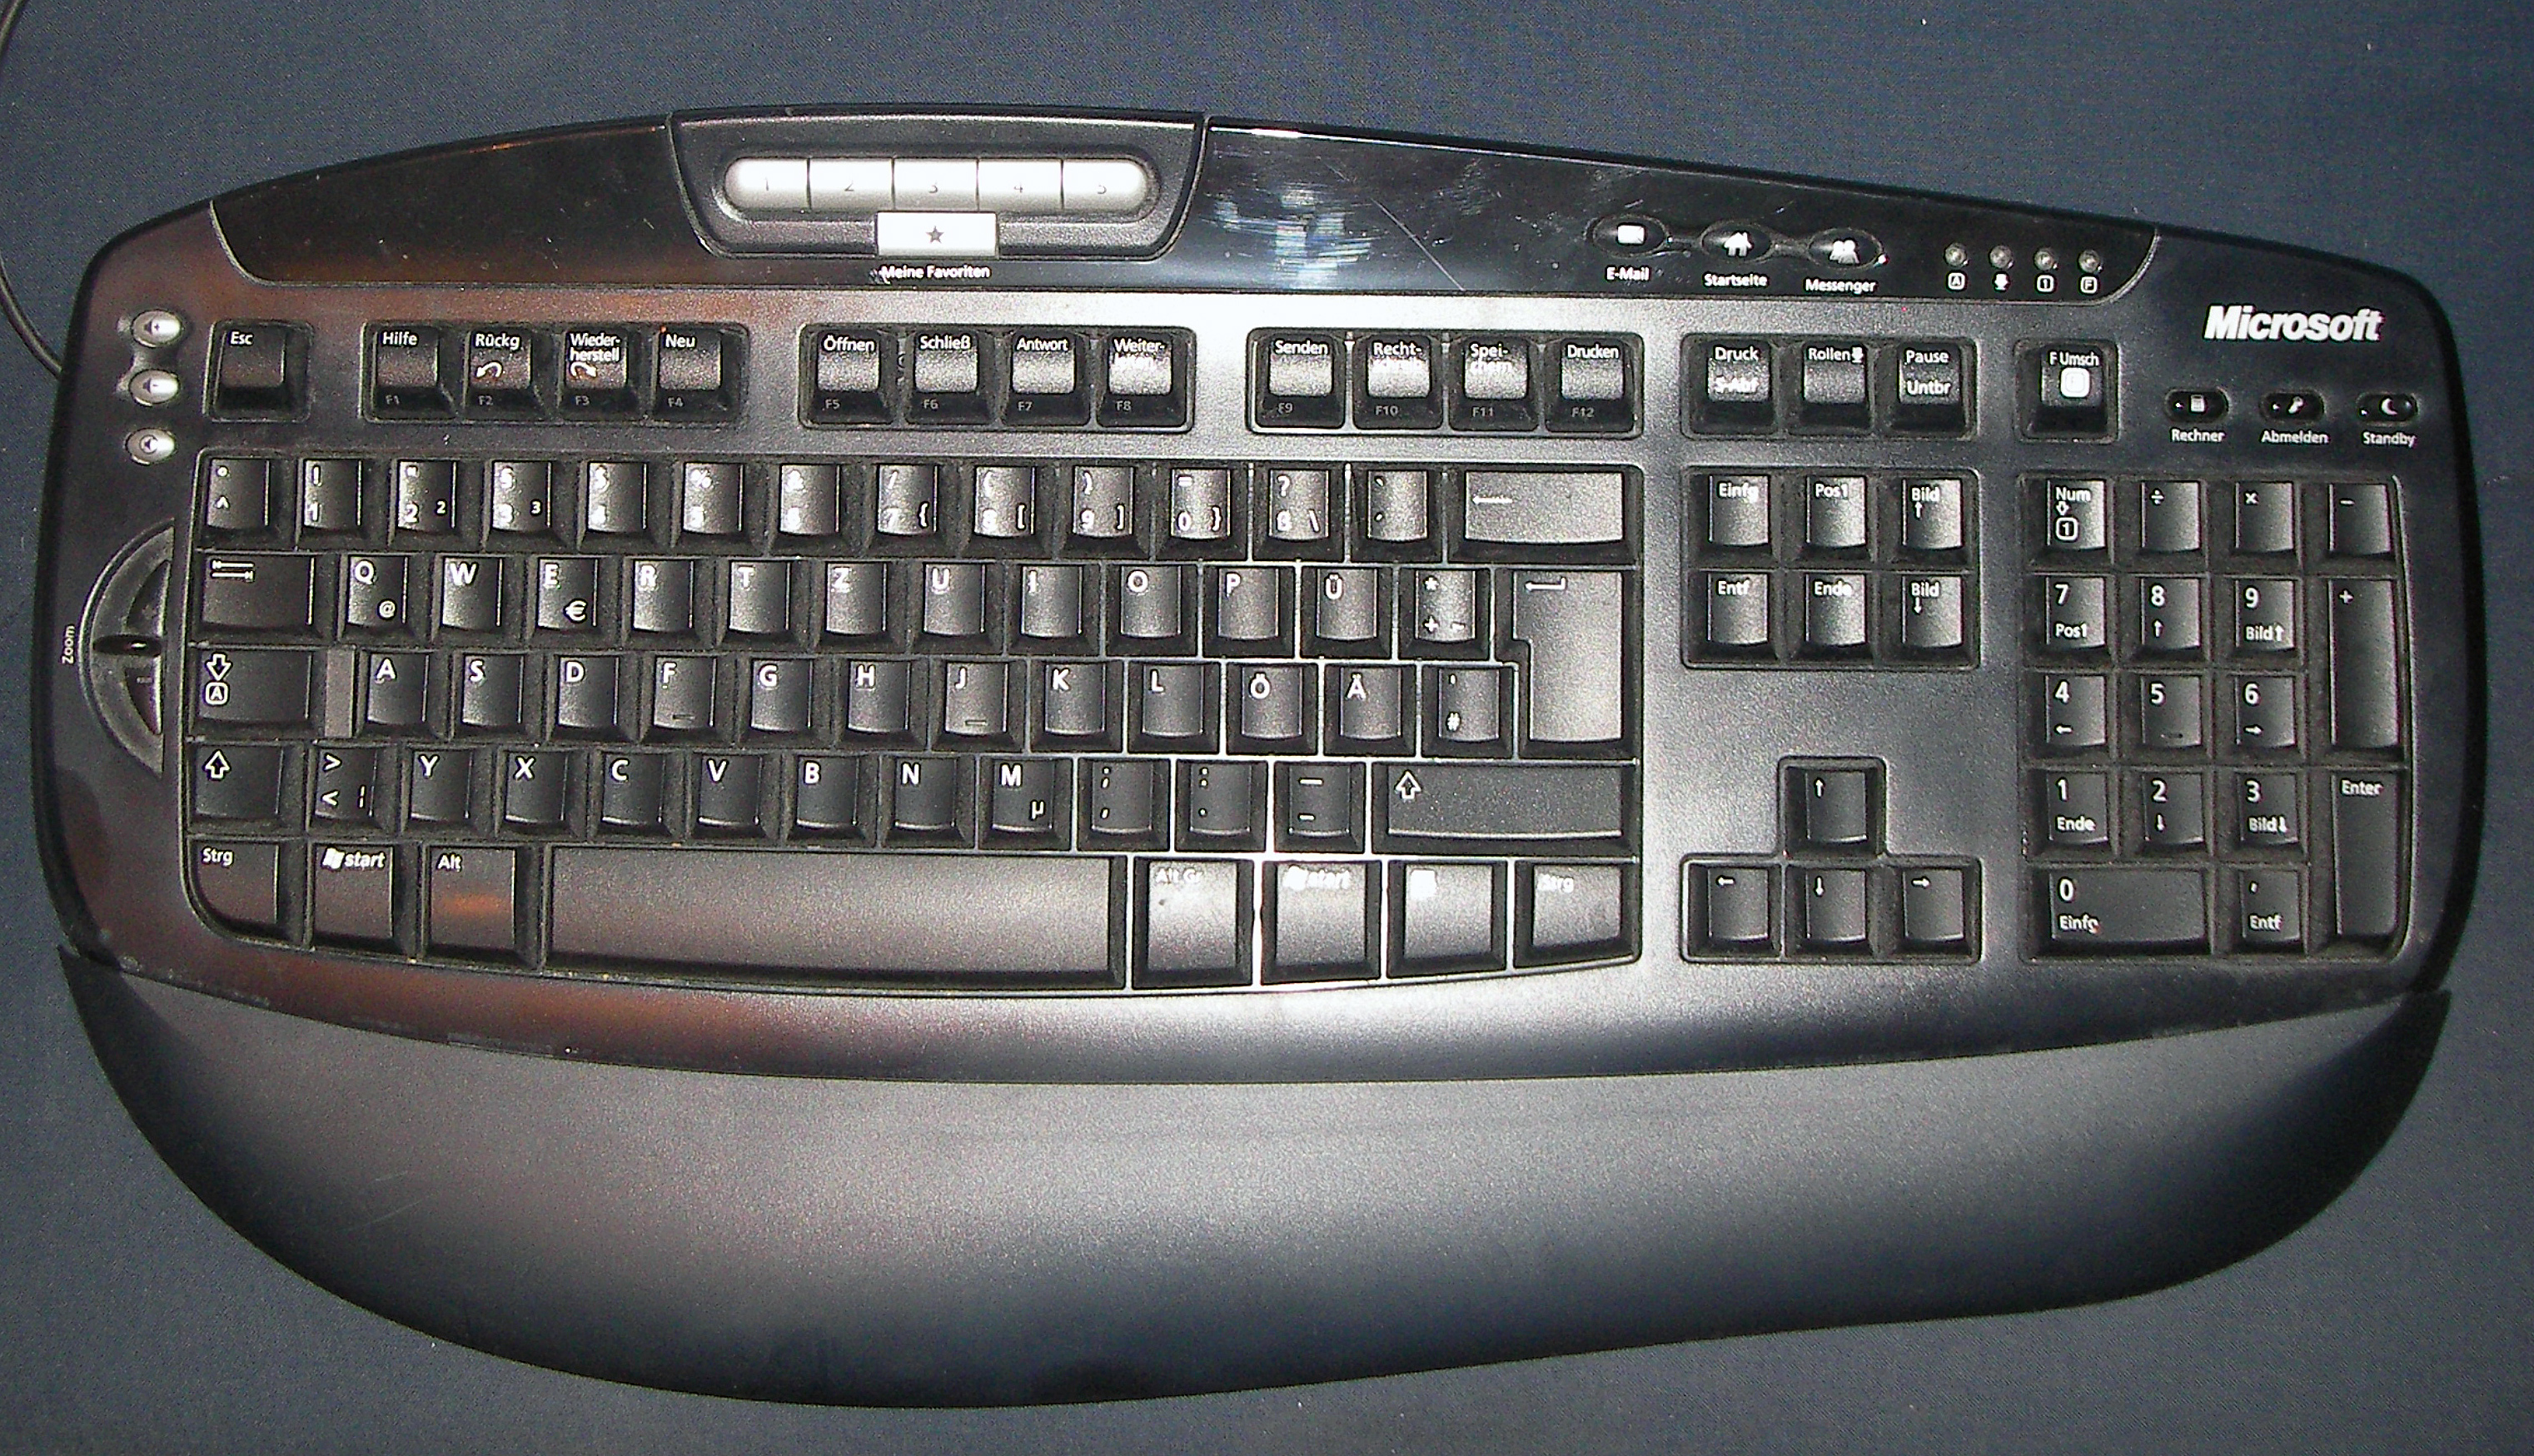 microsoft digital media keyboard 1031 driver download